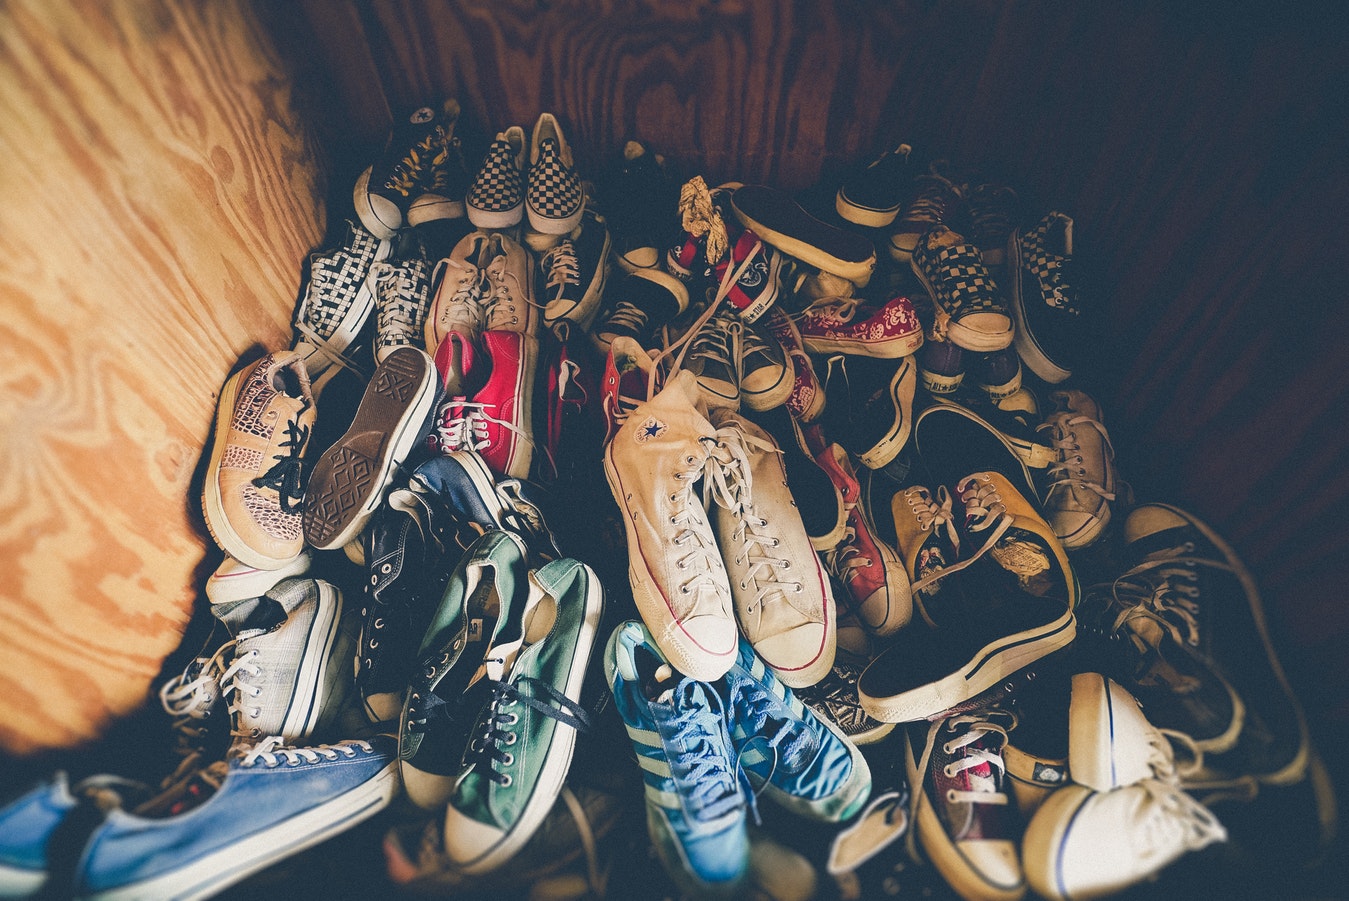 https://www.lifestorage.com/blog/wp-content/uploads/2019/01/life-storage-how-to-store-shoes-3.jpeg